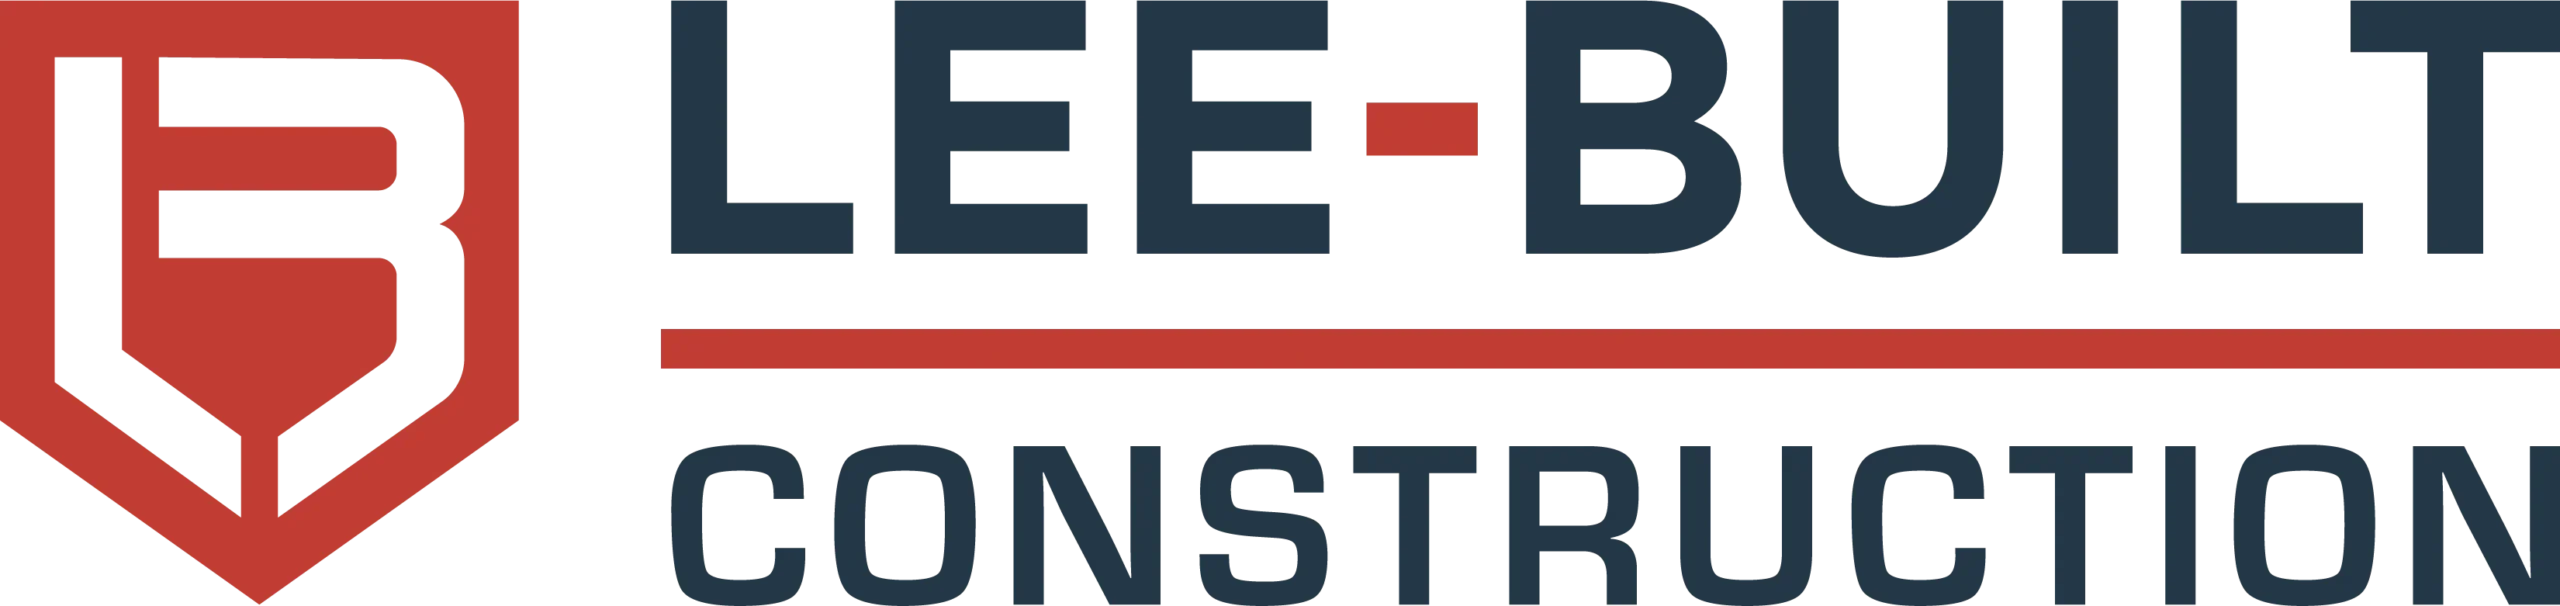 Lee-Built Construction logo